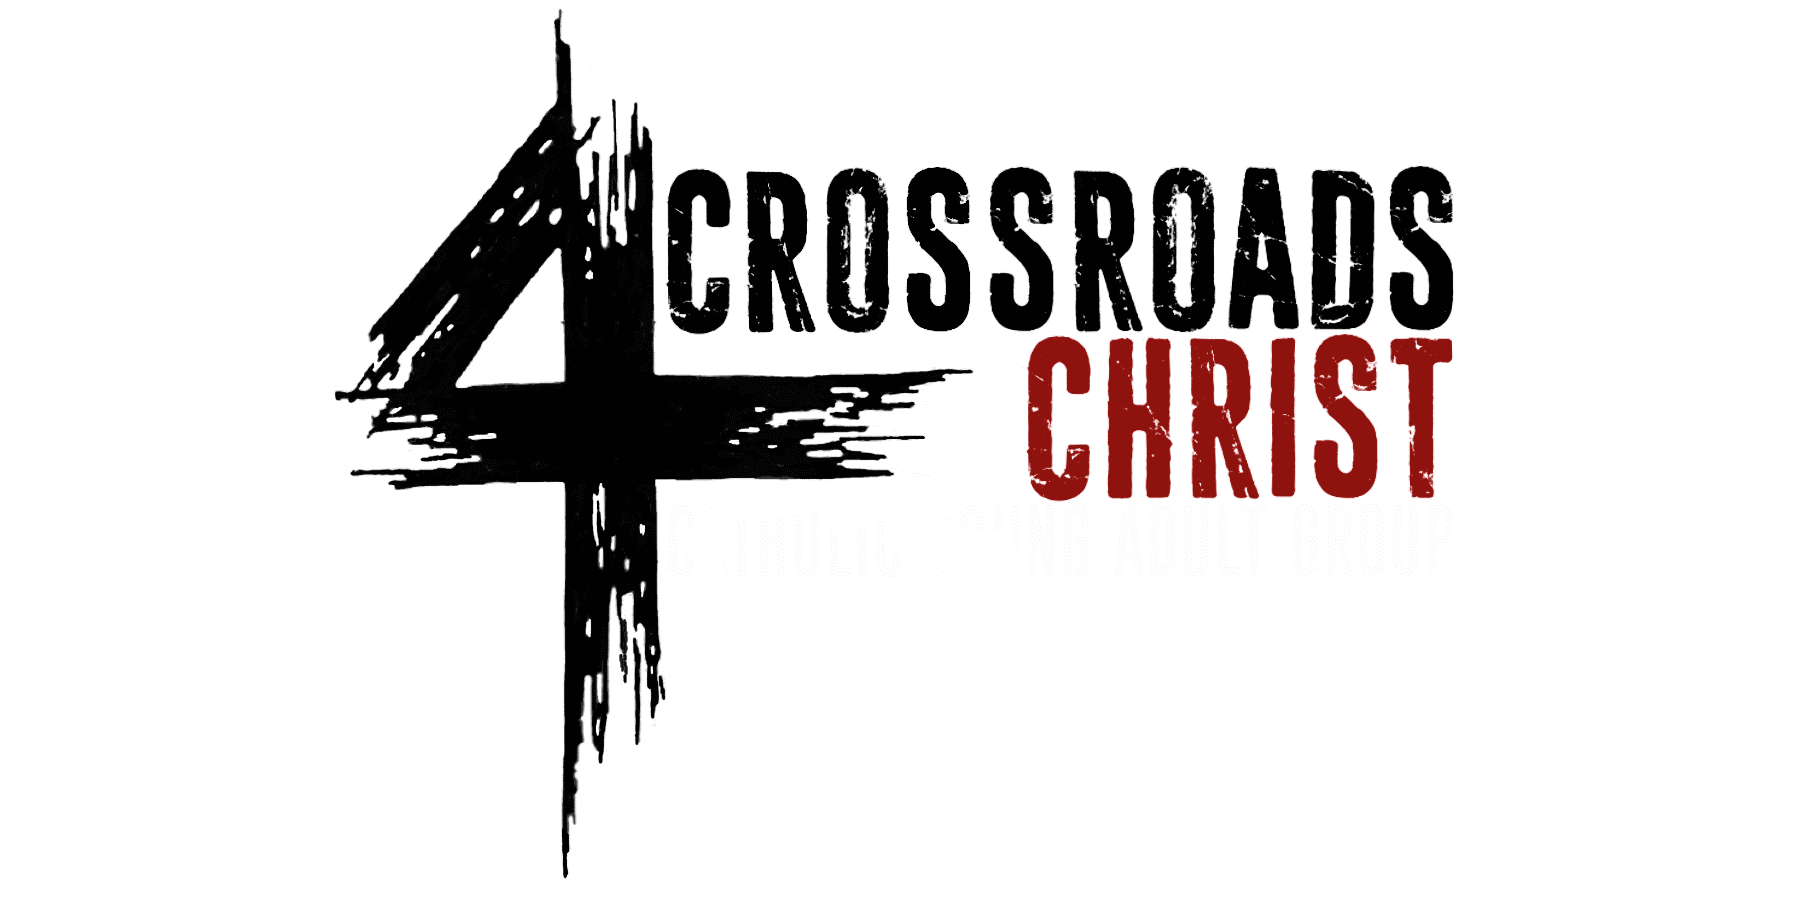 Crossroads 4 Christ